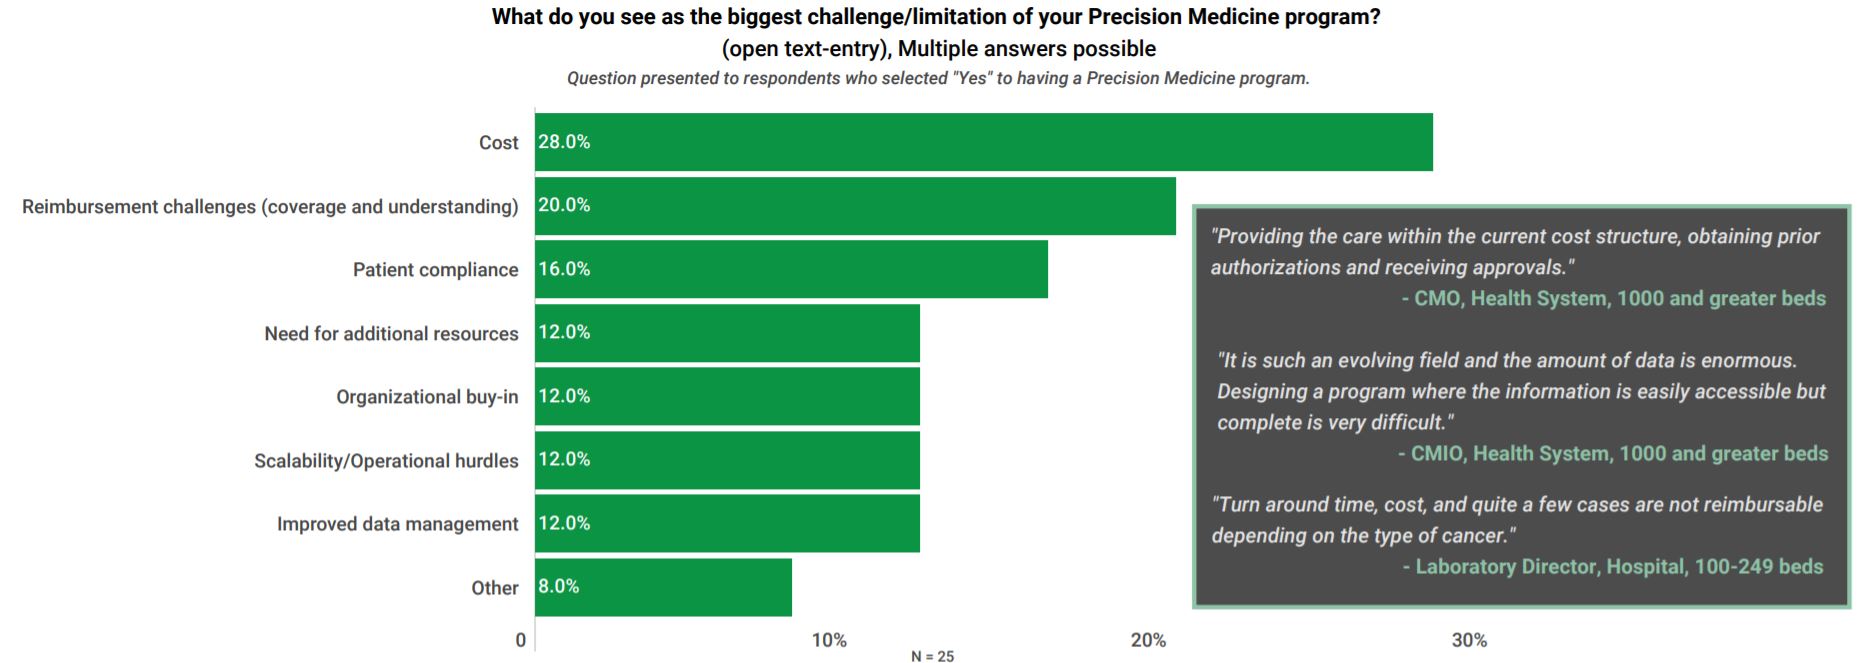 Challenges of precision medicine programs graph